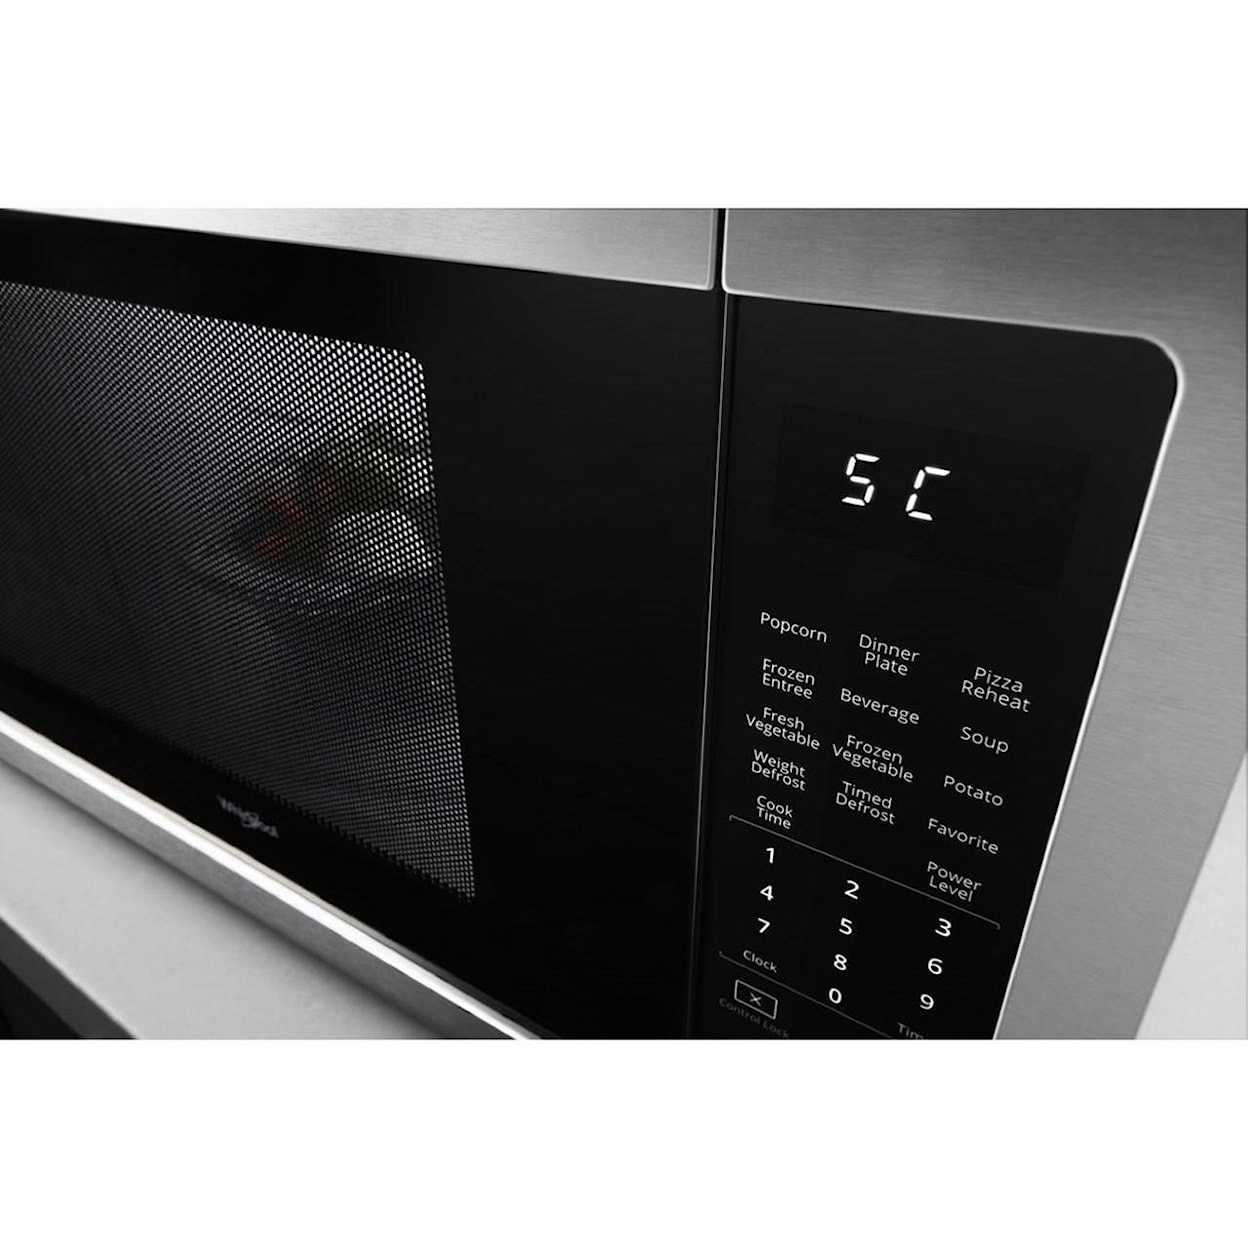 Whirlpool Cooking@Microwave@Countertop   2.2 cu. ft. Countertop Microwave